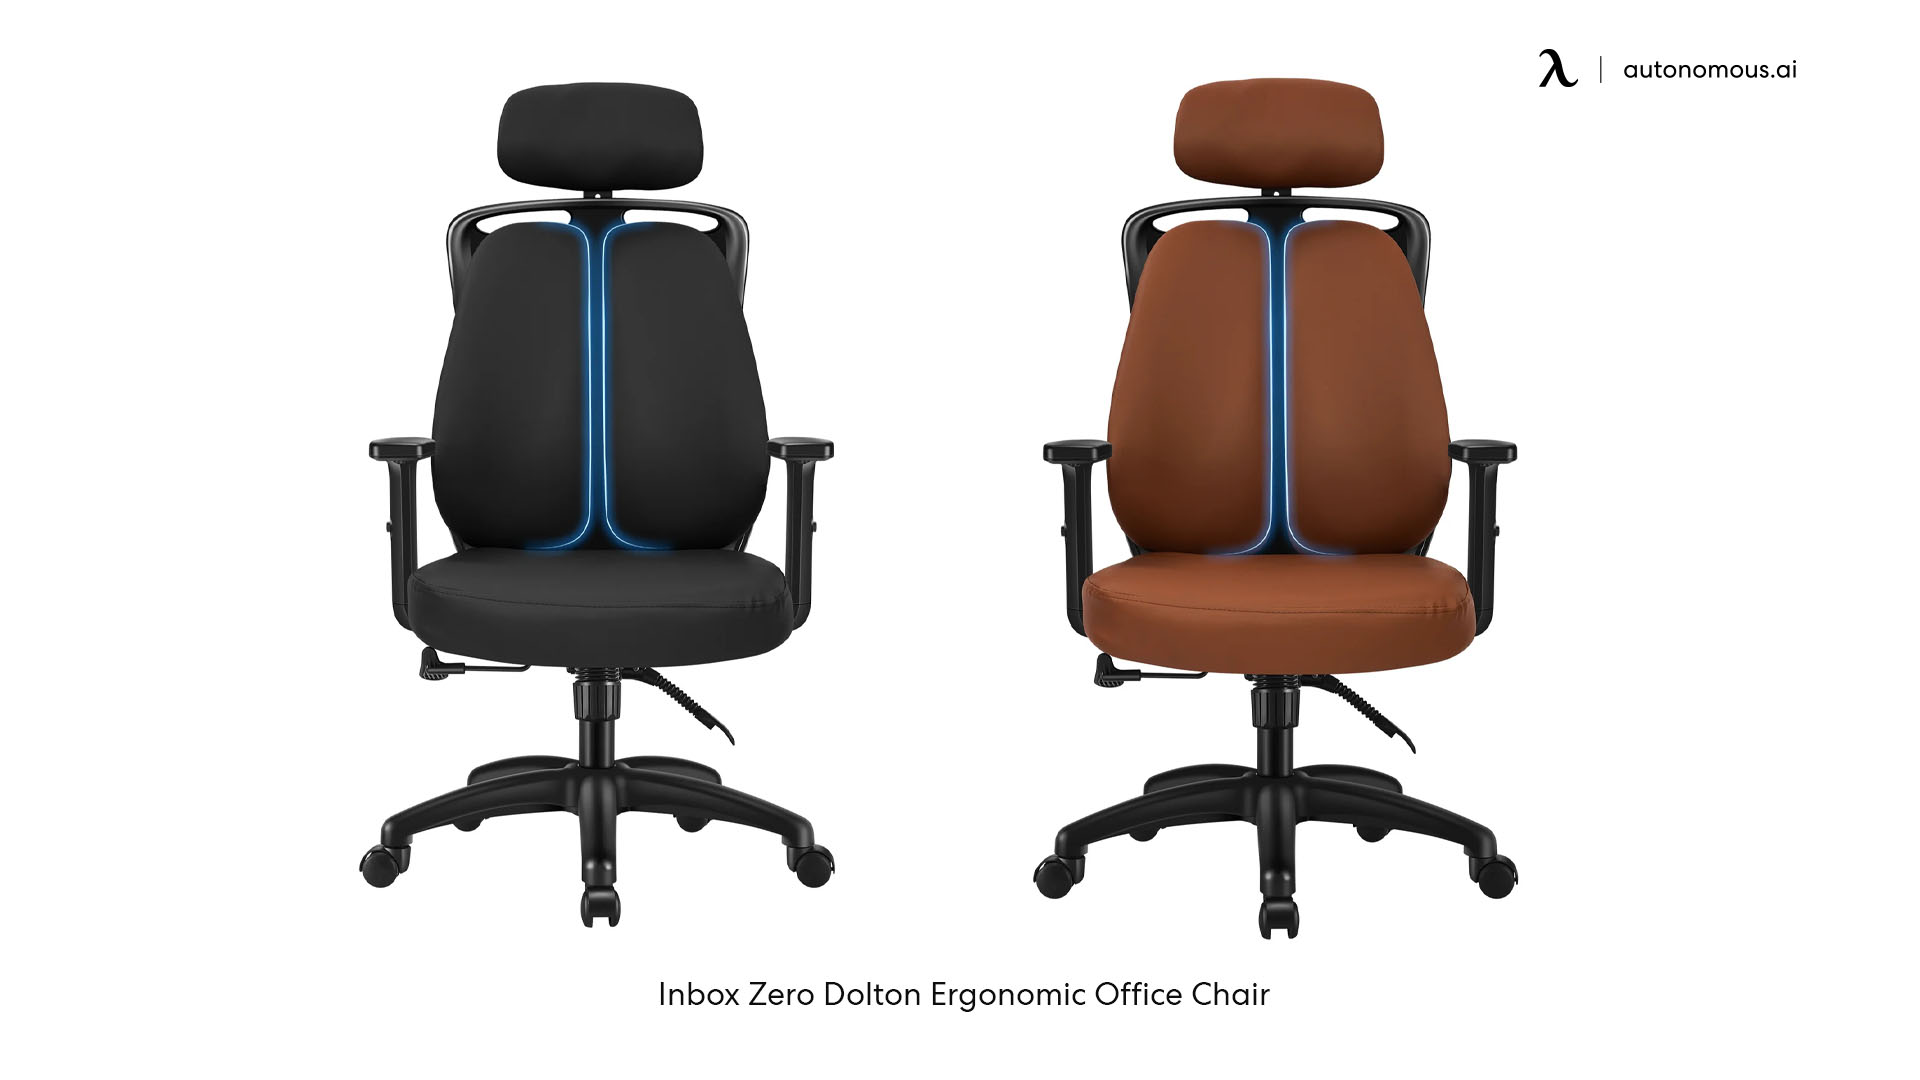 Inbox Zero headrest for office chair